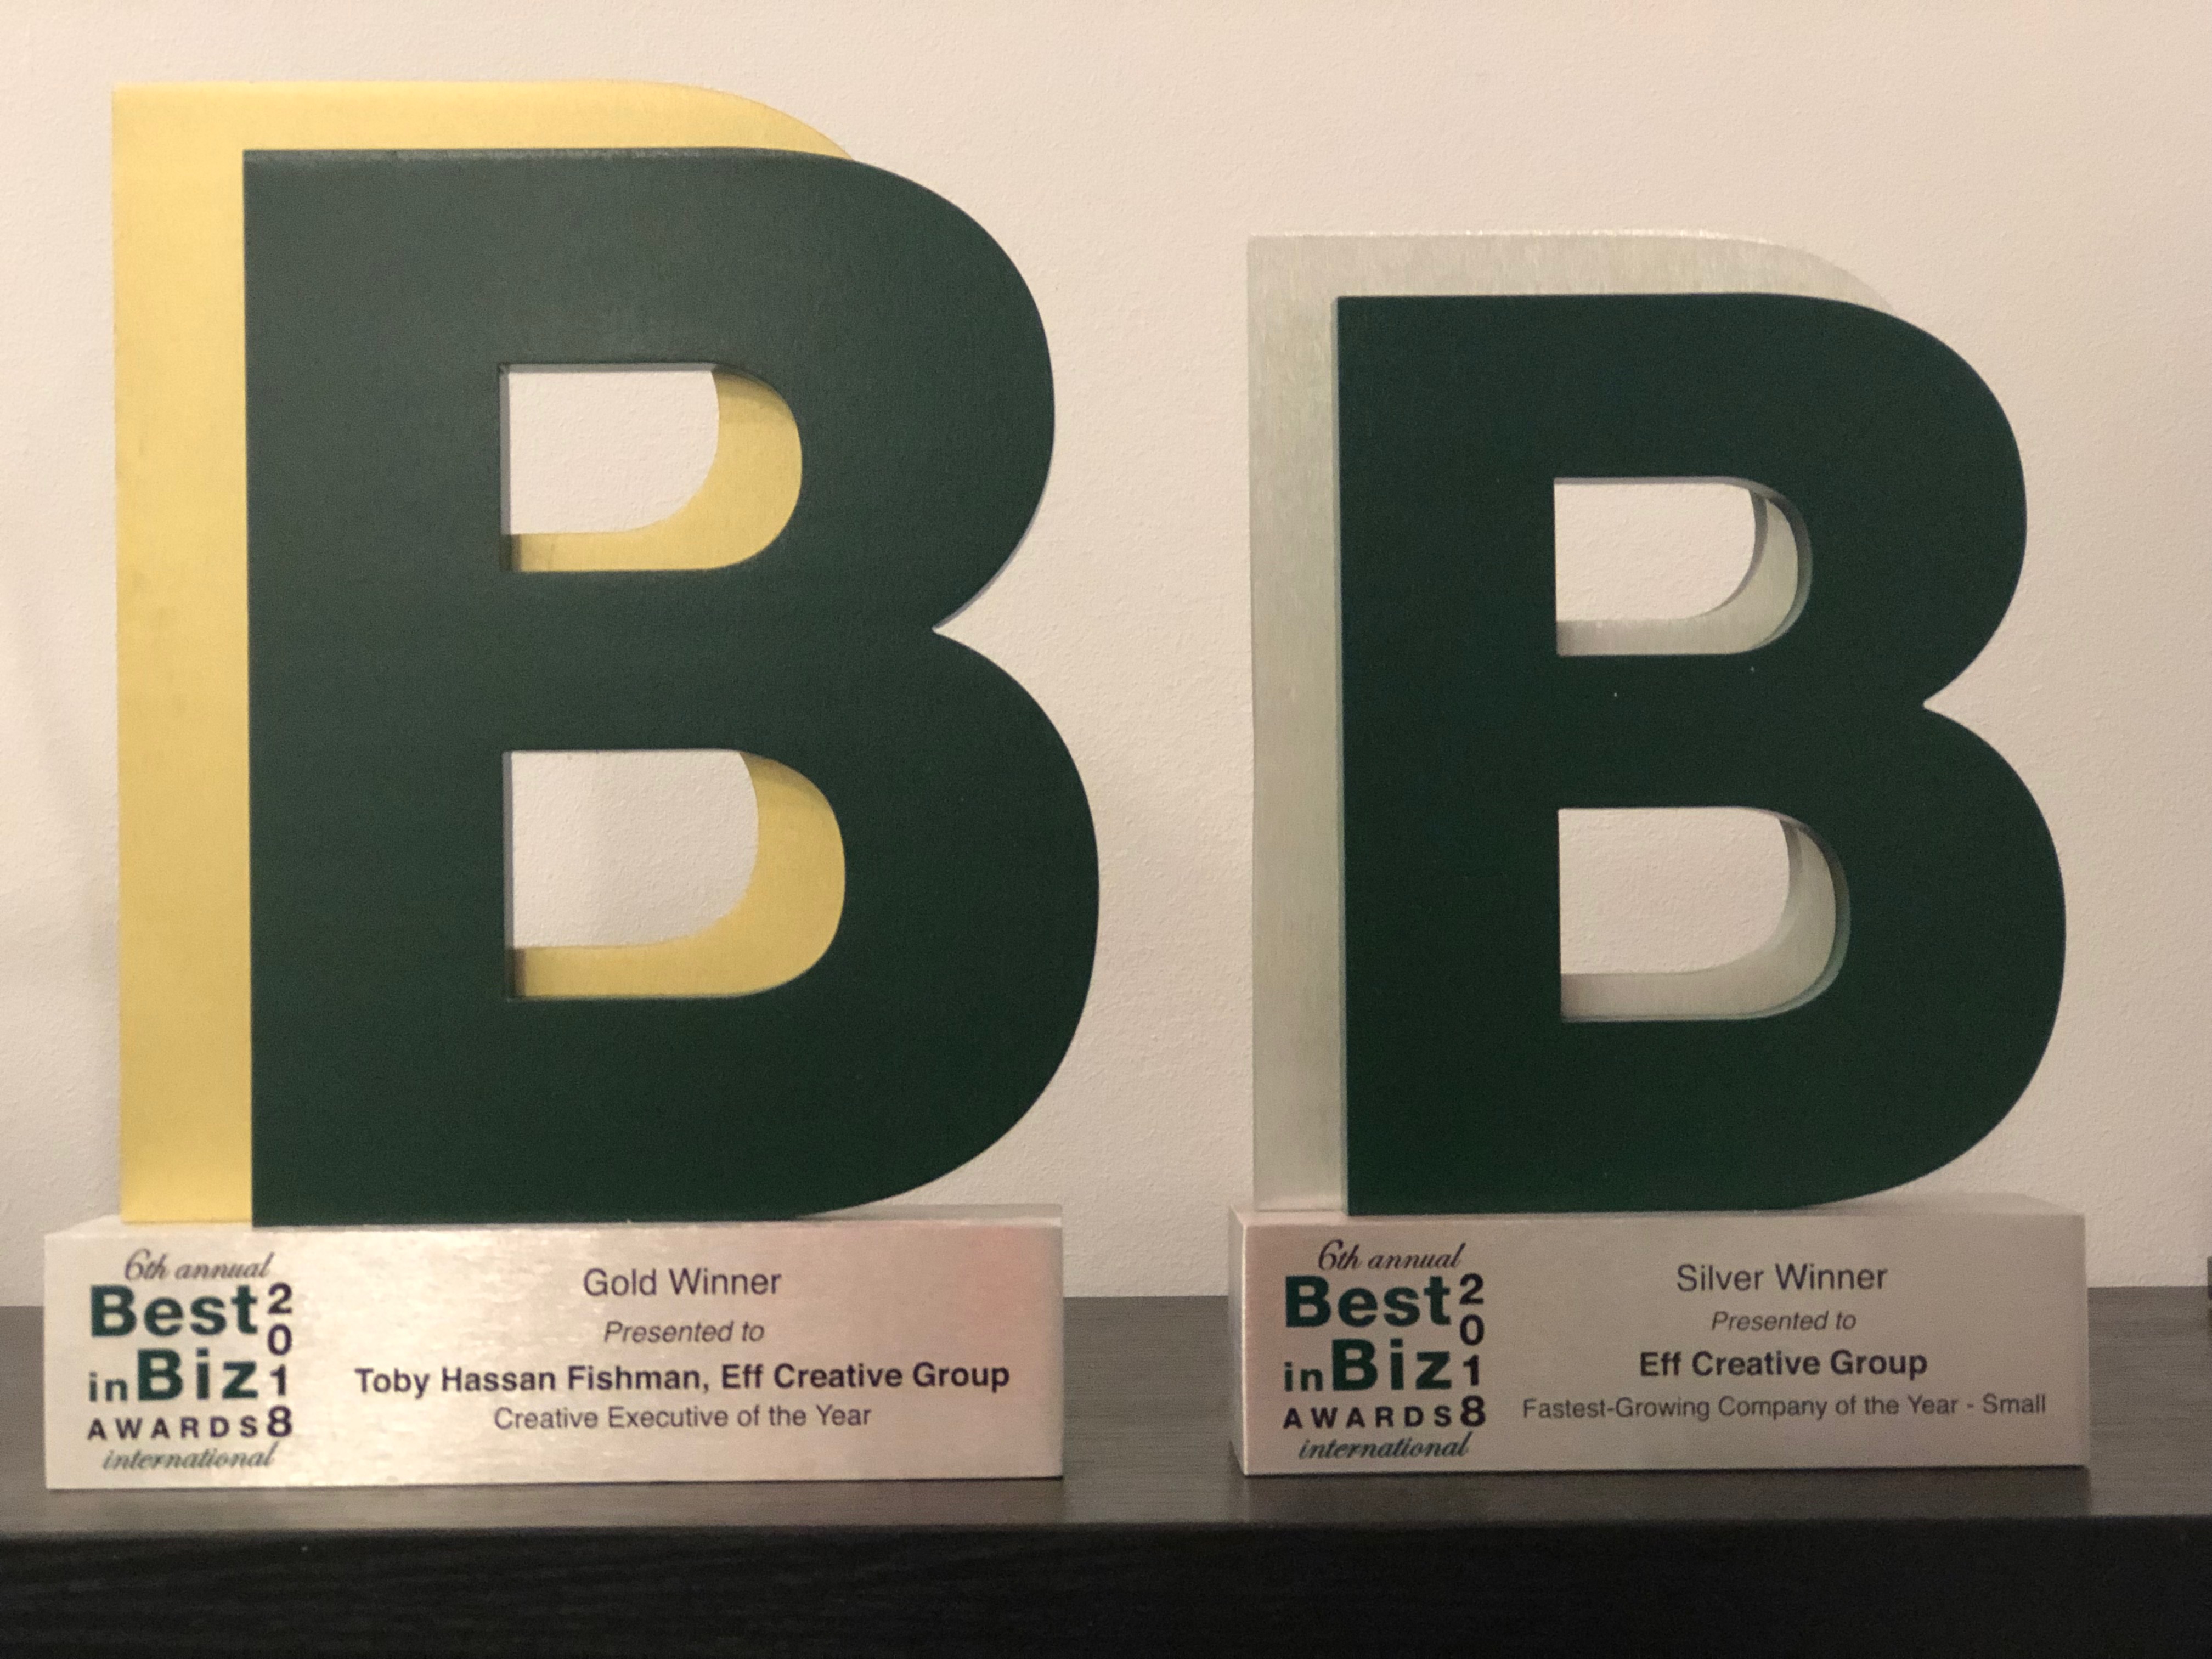 <a class="wonderplugin-gridgallery-posttitle-link" href="https://effcreative.com/awards/best-in-the-biz-awards/">Best in Biz Awards</a>